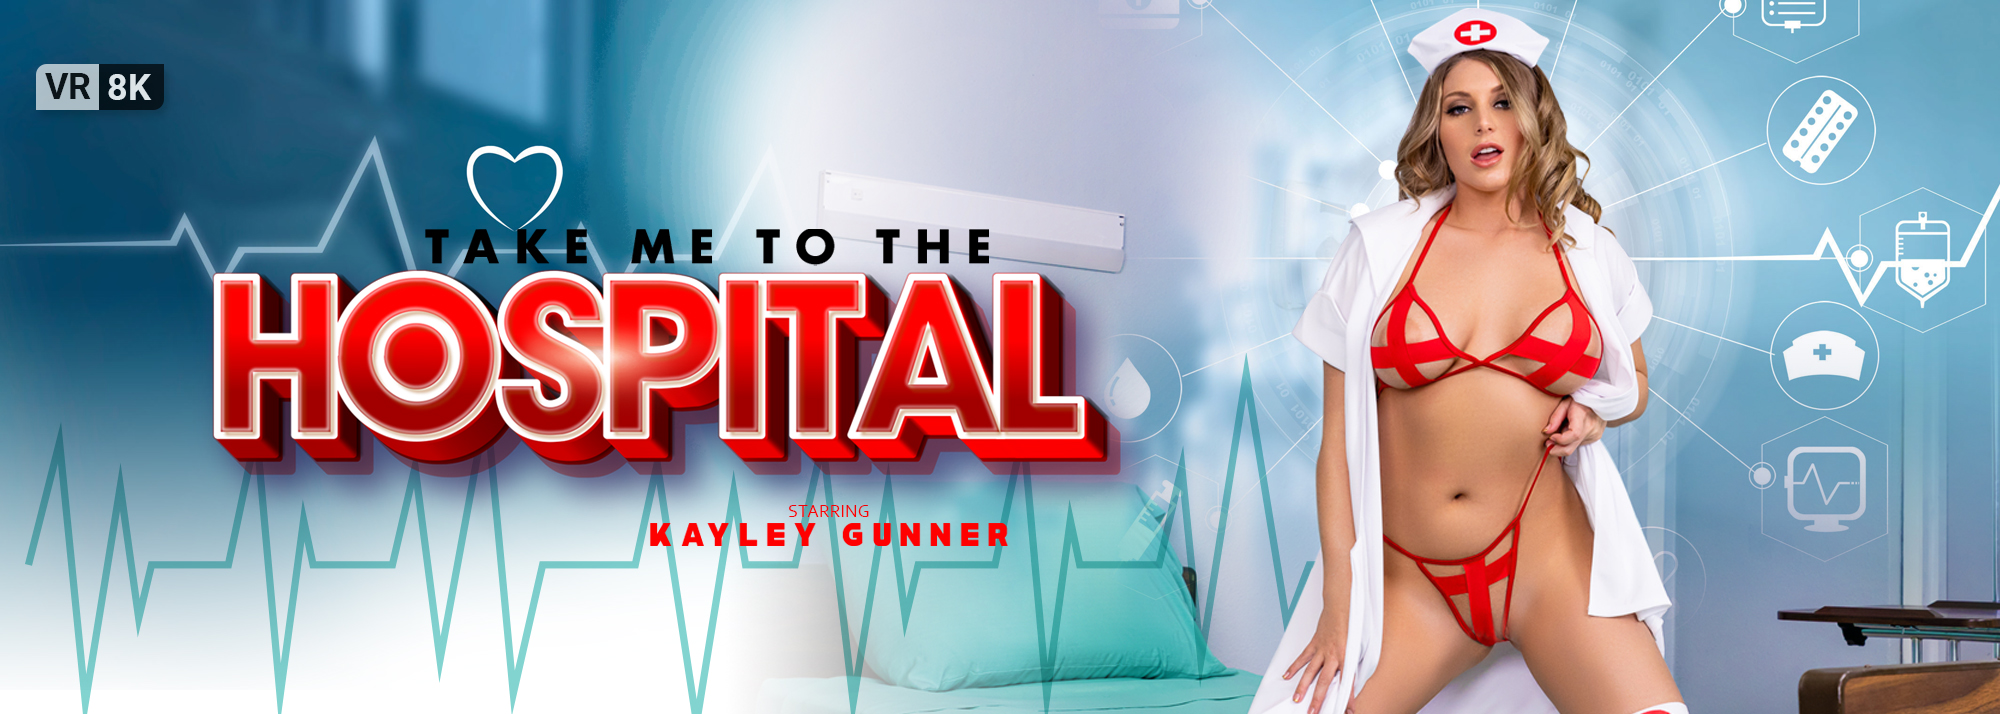 Take Me To The Hospital - VR Porn Video, Starring Kayley Gunner VR